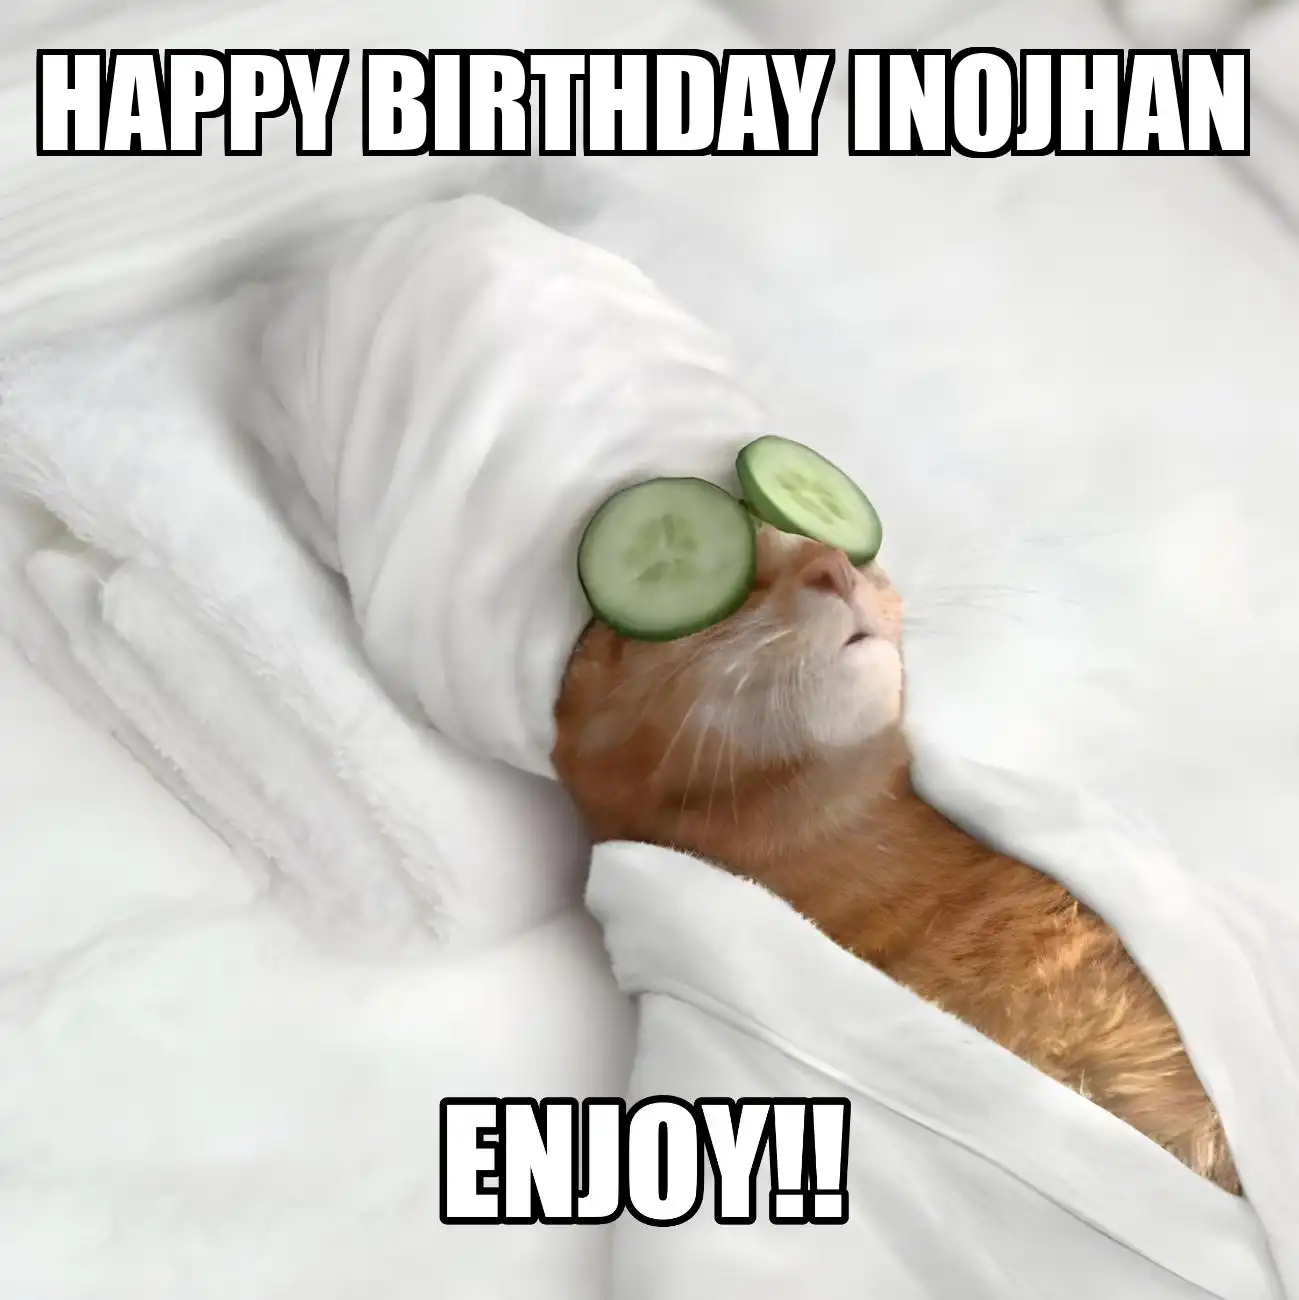 Happy Birthday Inojhan Enjoy Cat Meme